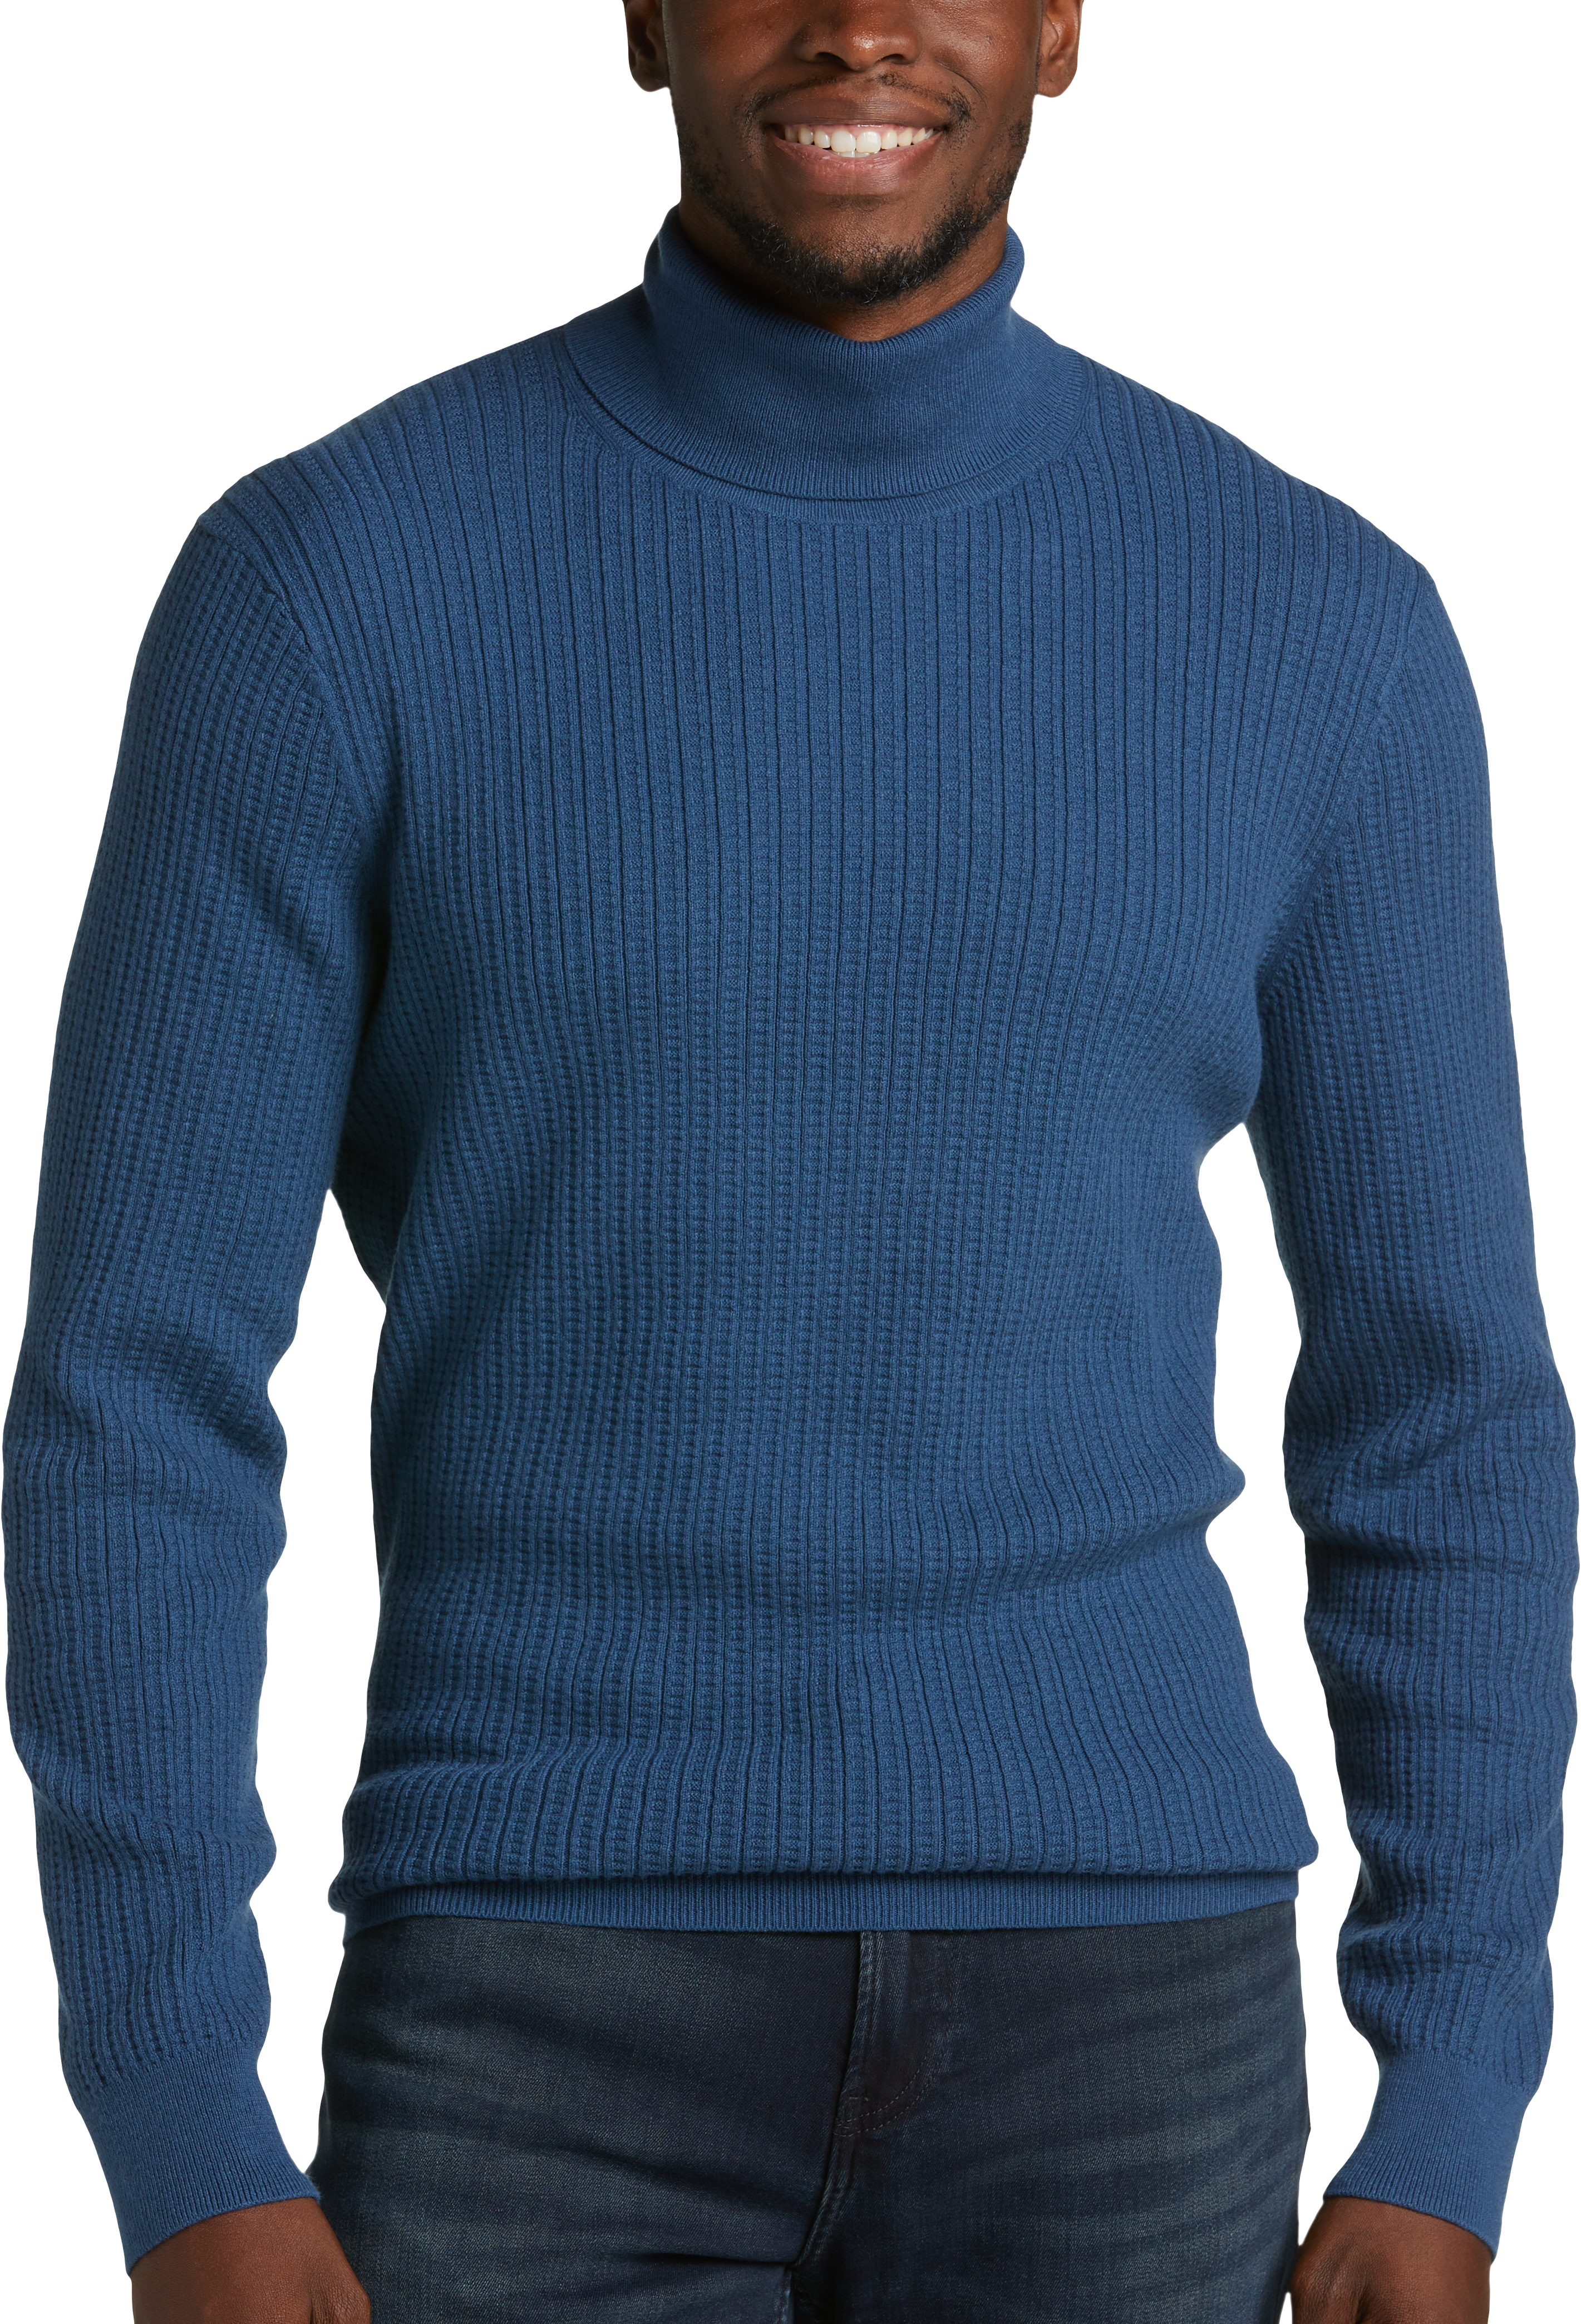 Michael Strahan Modern Fit Textured Turtleneck Sweater, Blue - Men's ...